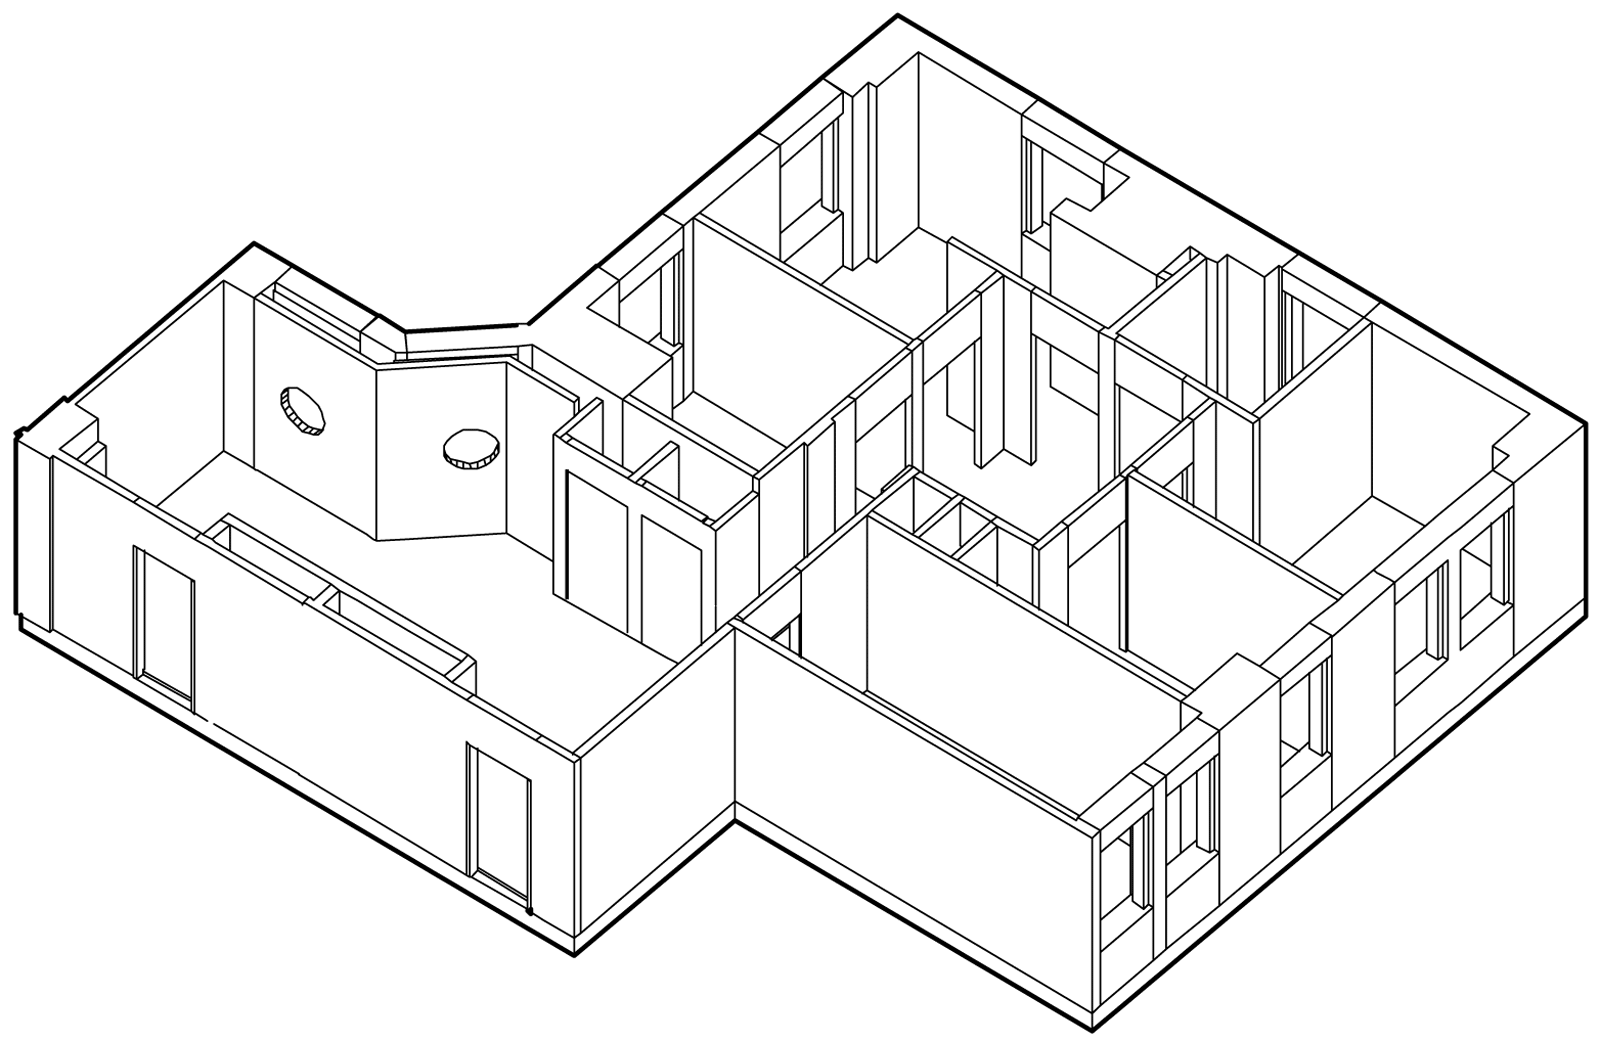 Floorplan (axometric)